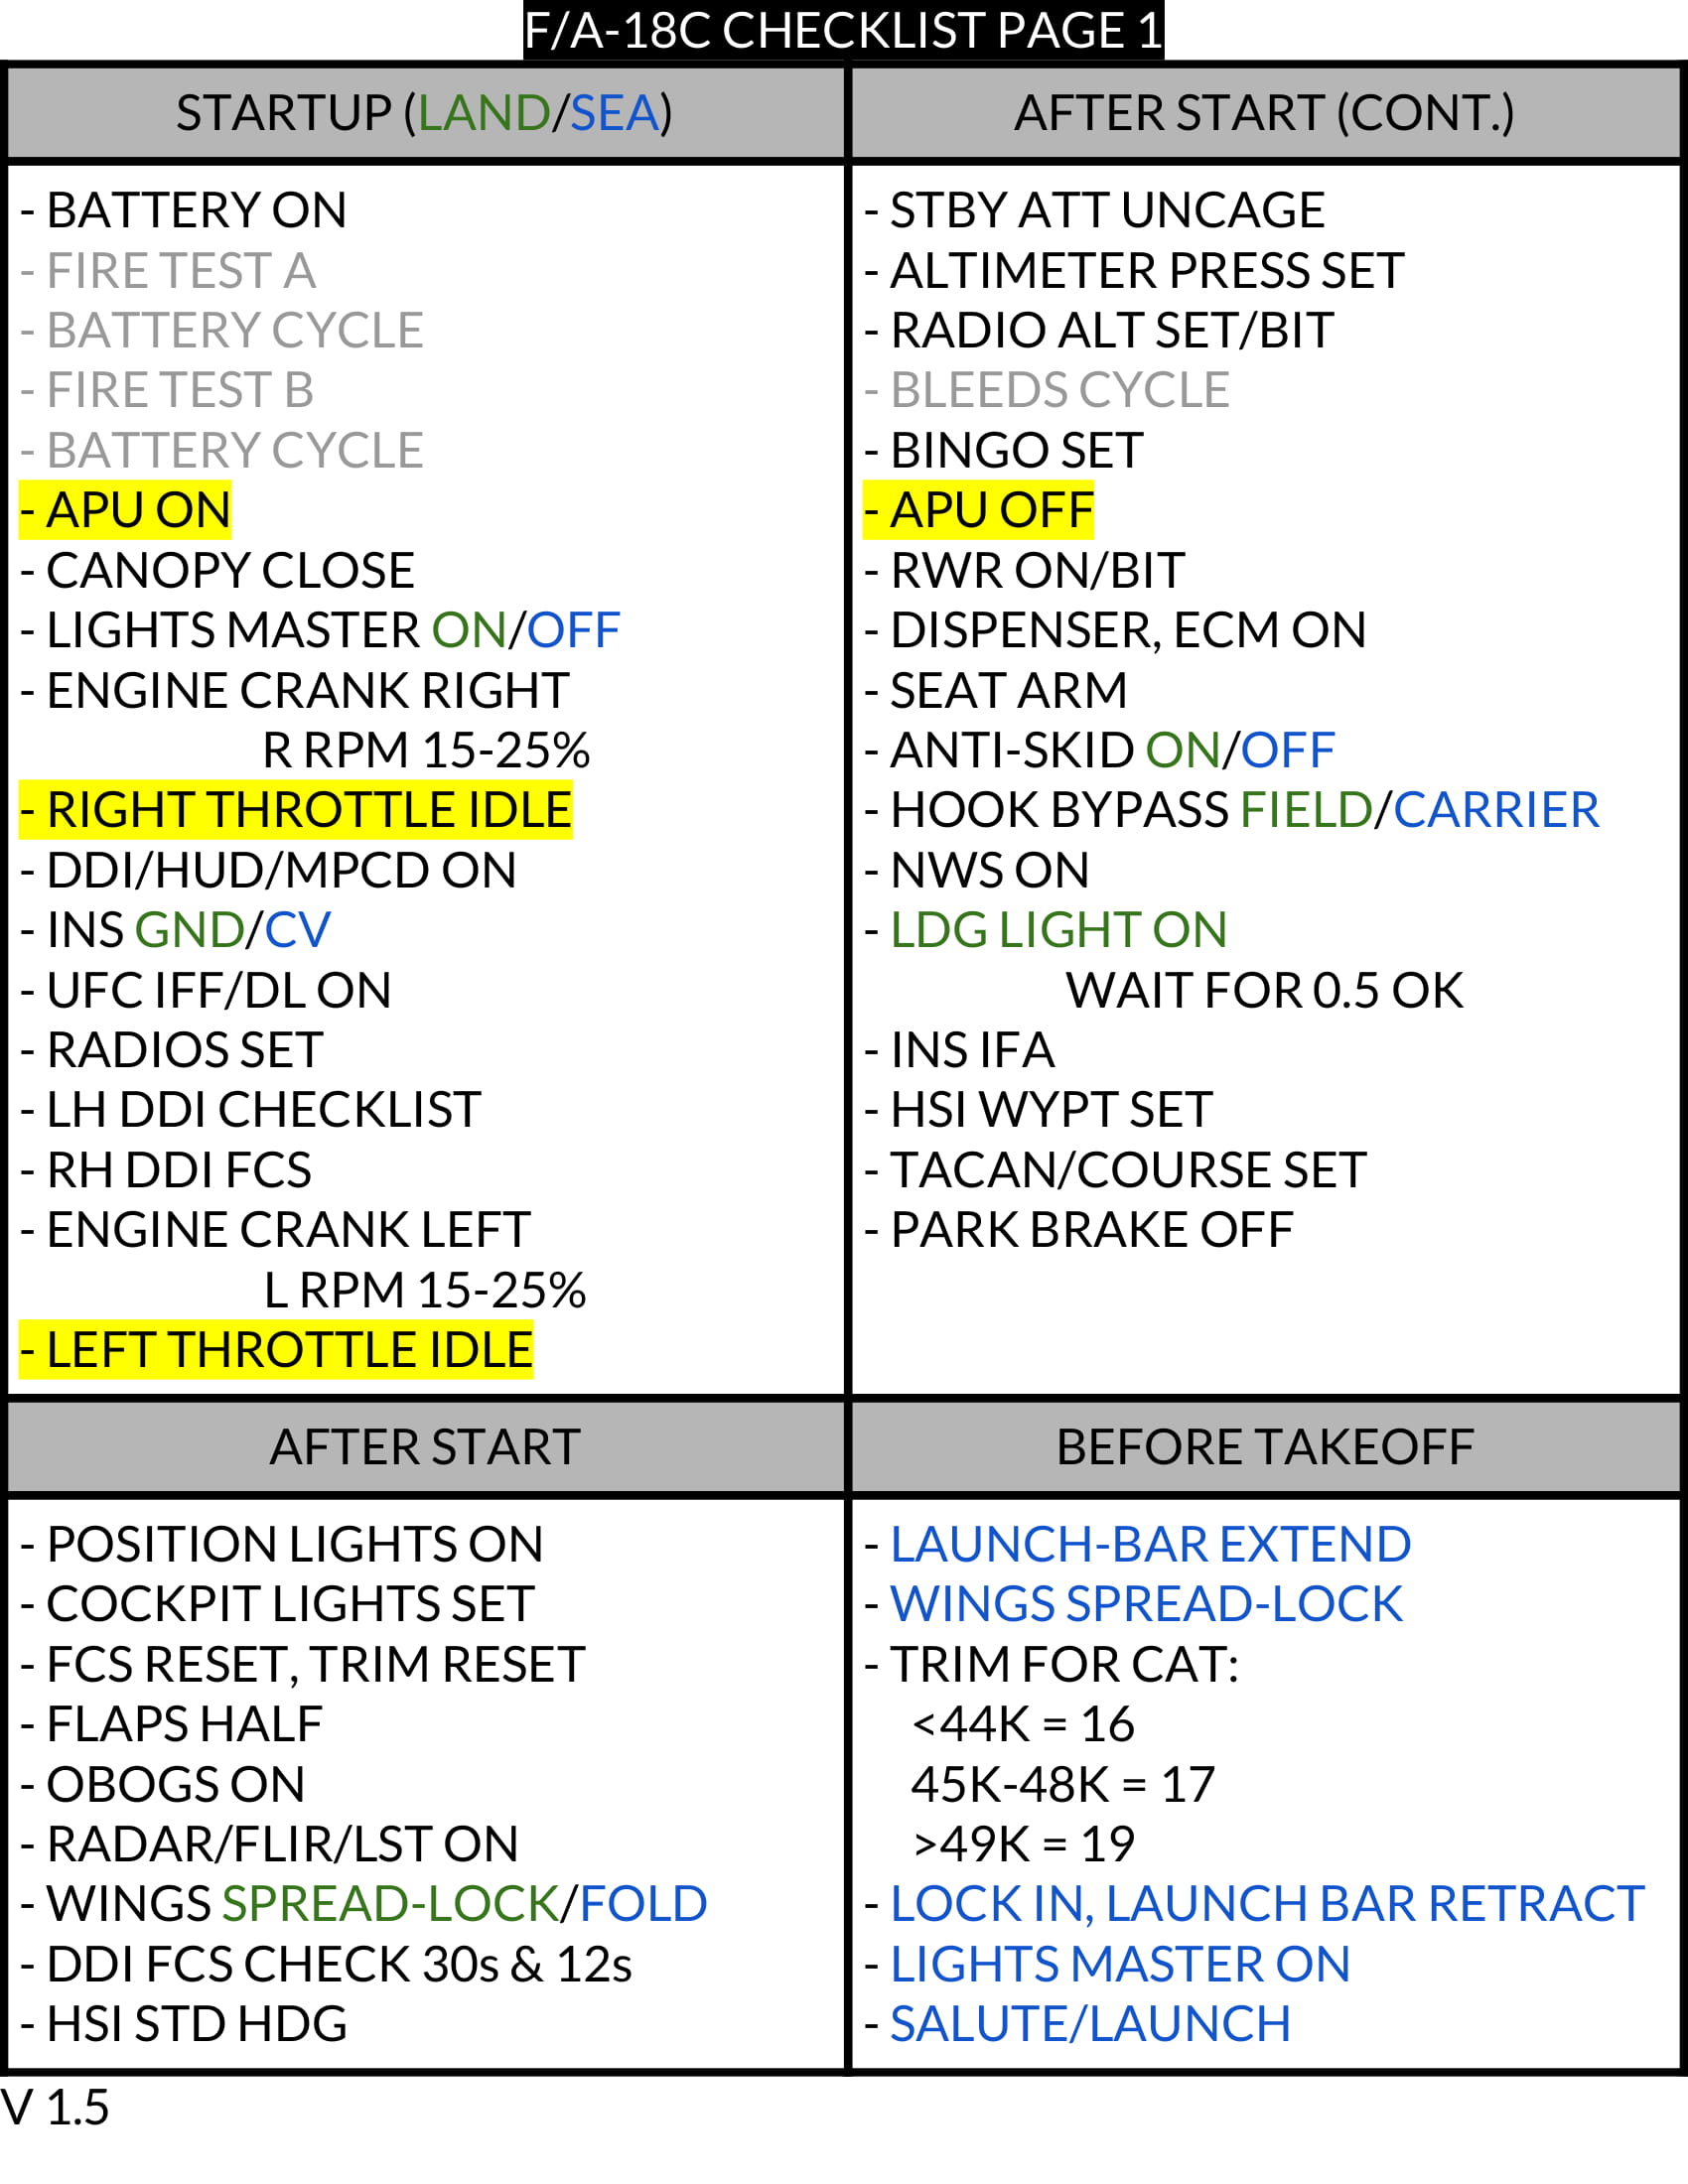 F/A-18C Enhanced Checklist v1.5